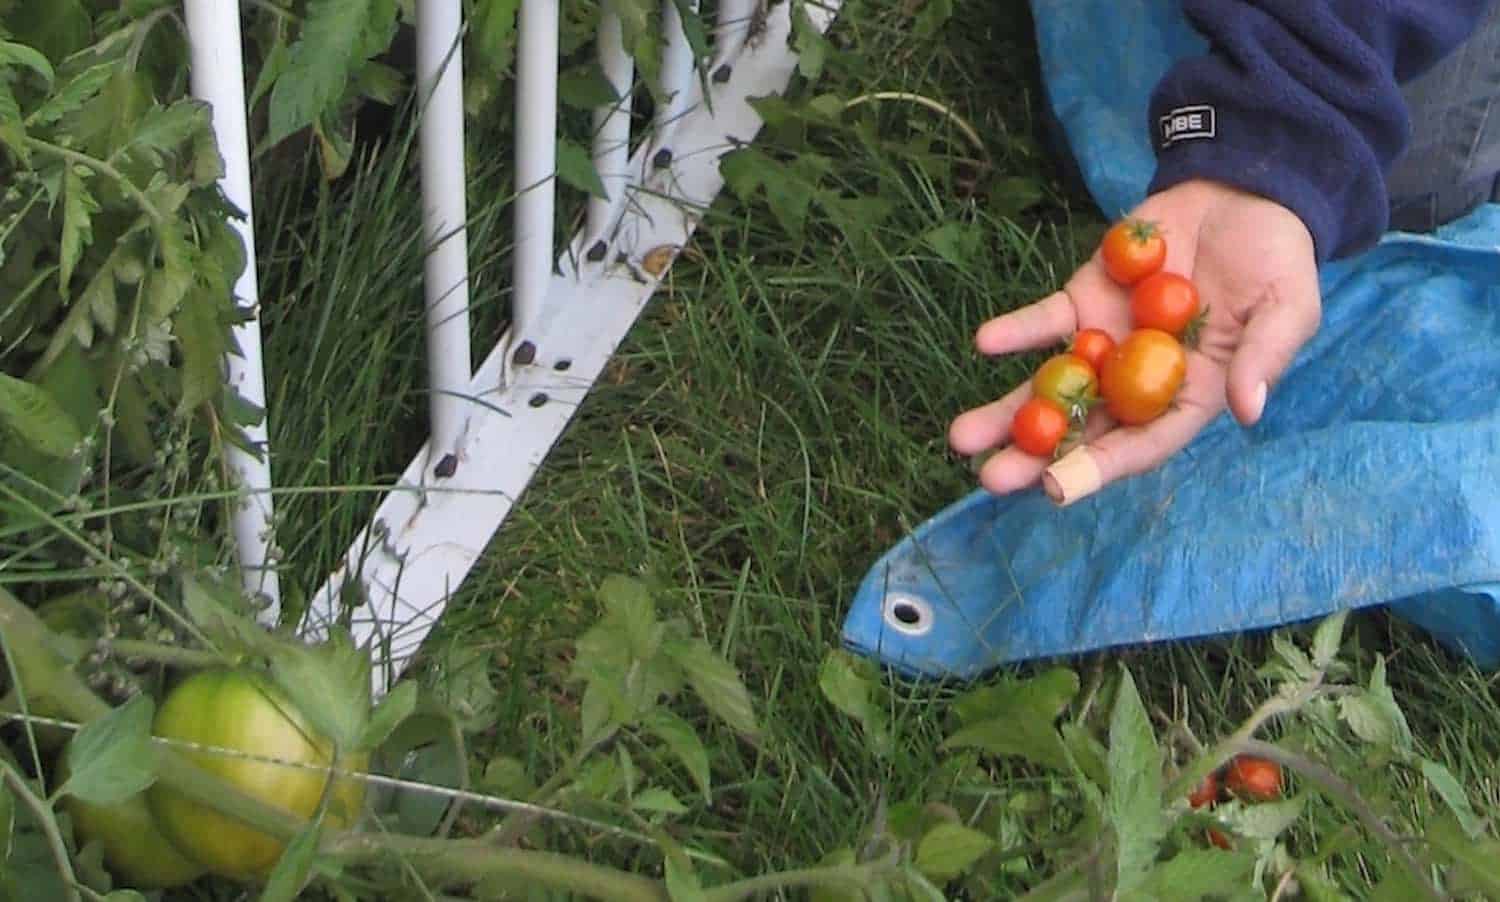 Mennonite中央委员会的安大略省土著邻居计划正在从种子开始培养社区。